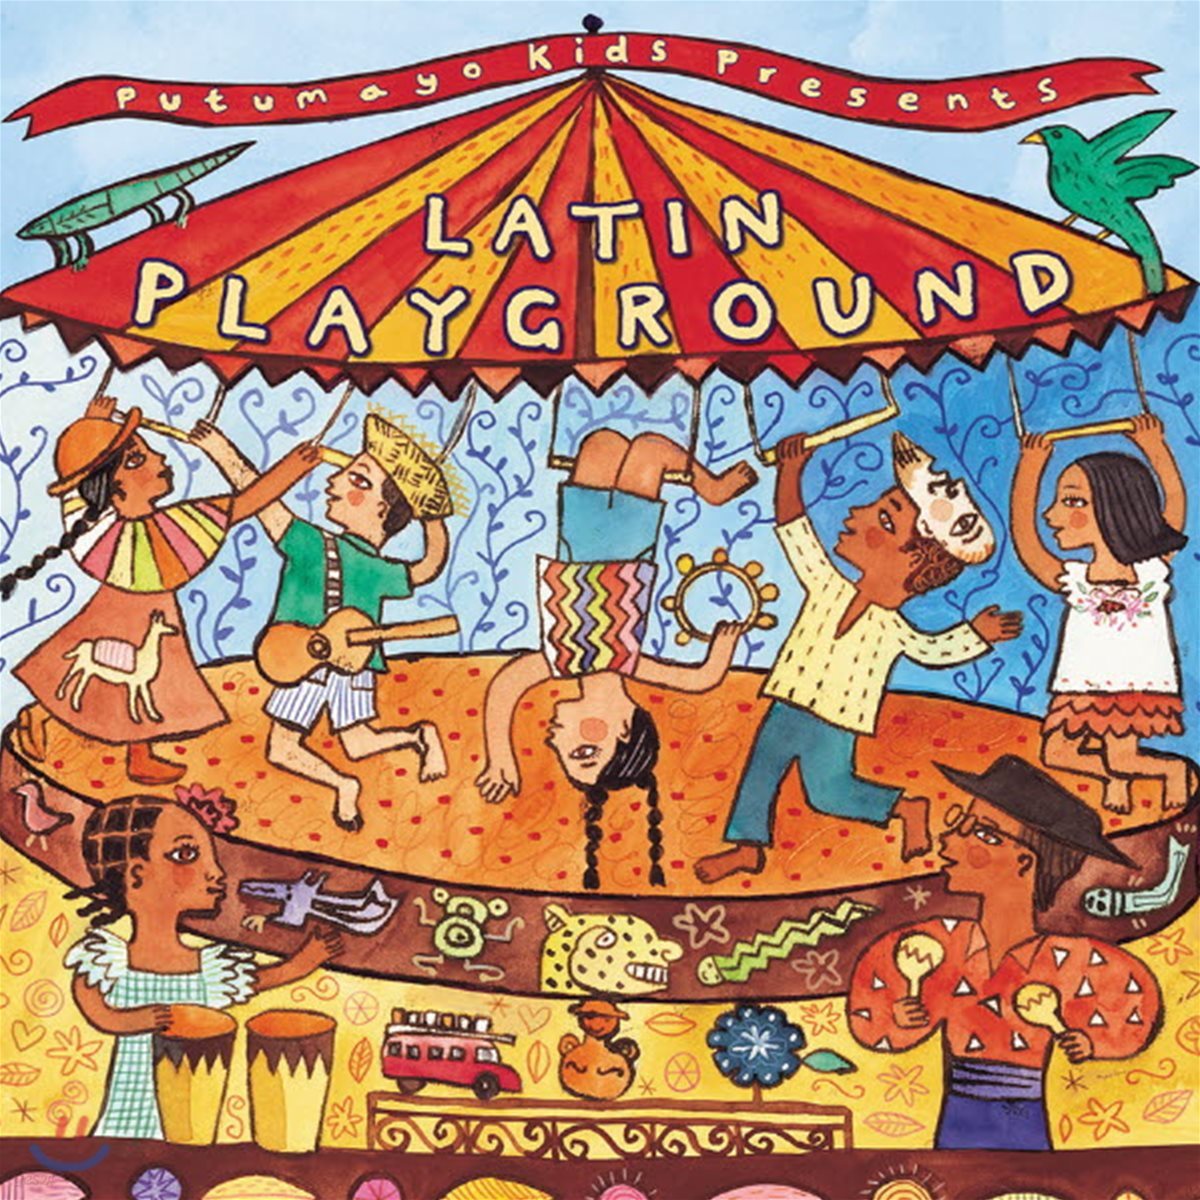 Putumayo Kids Presents Latin Playground (푸투마요 키즈 프레젠트 라틴 플레이그라운드)